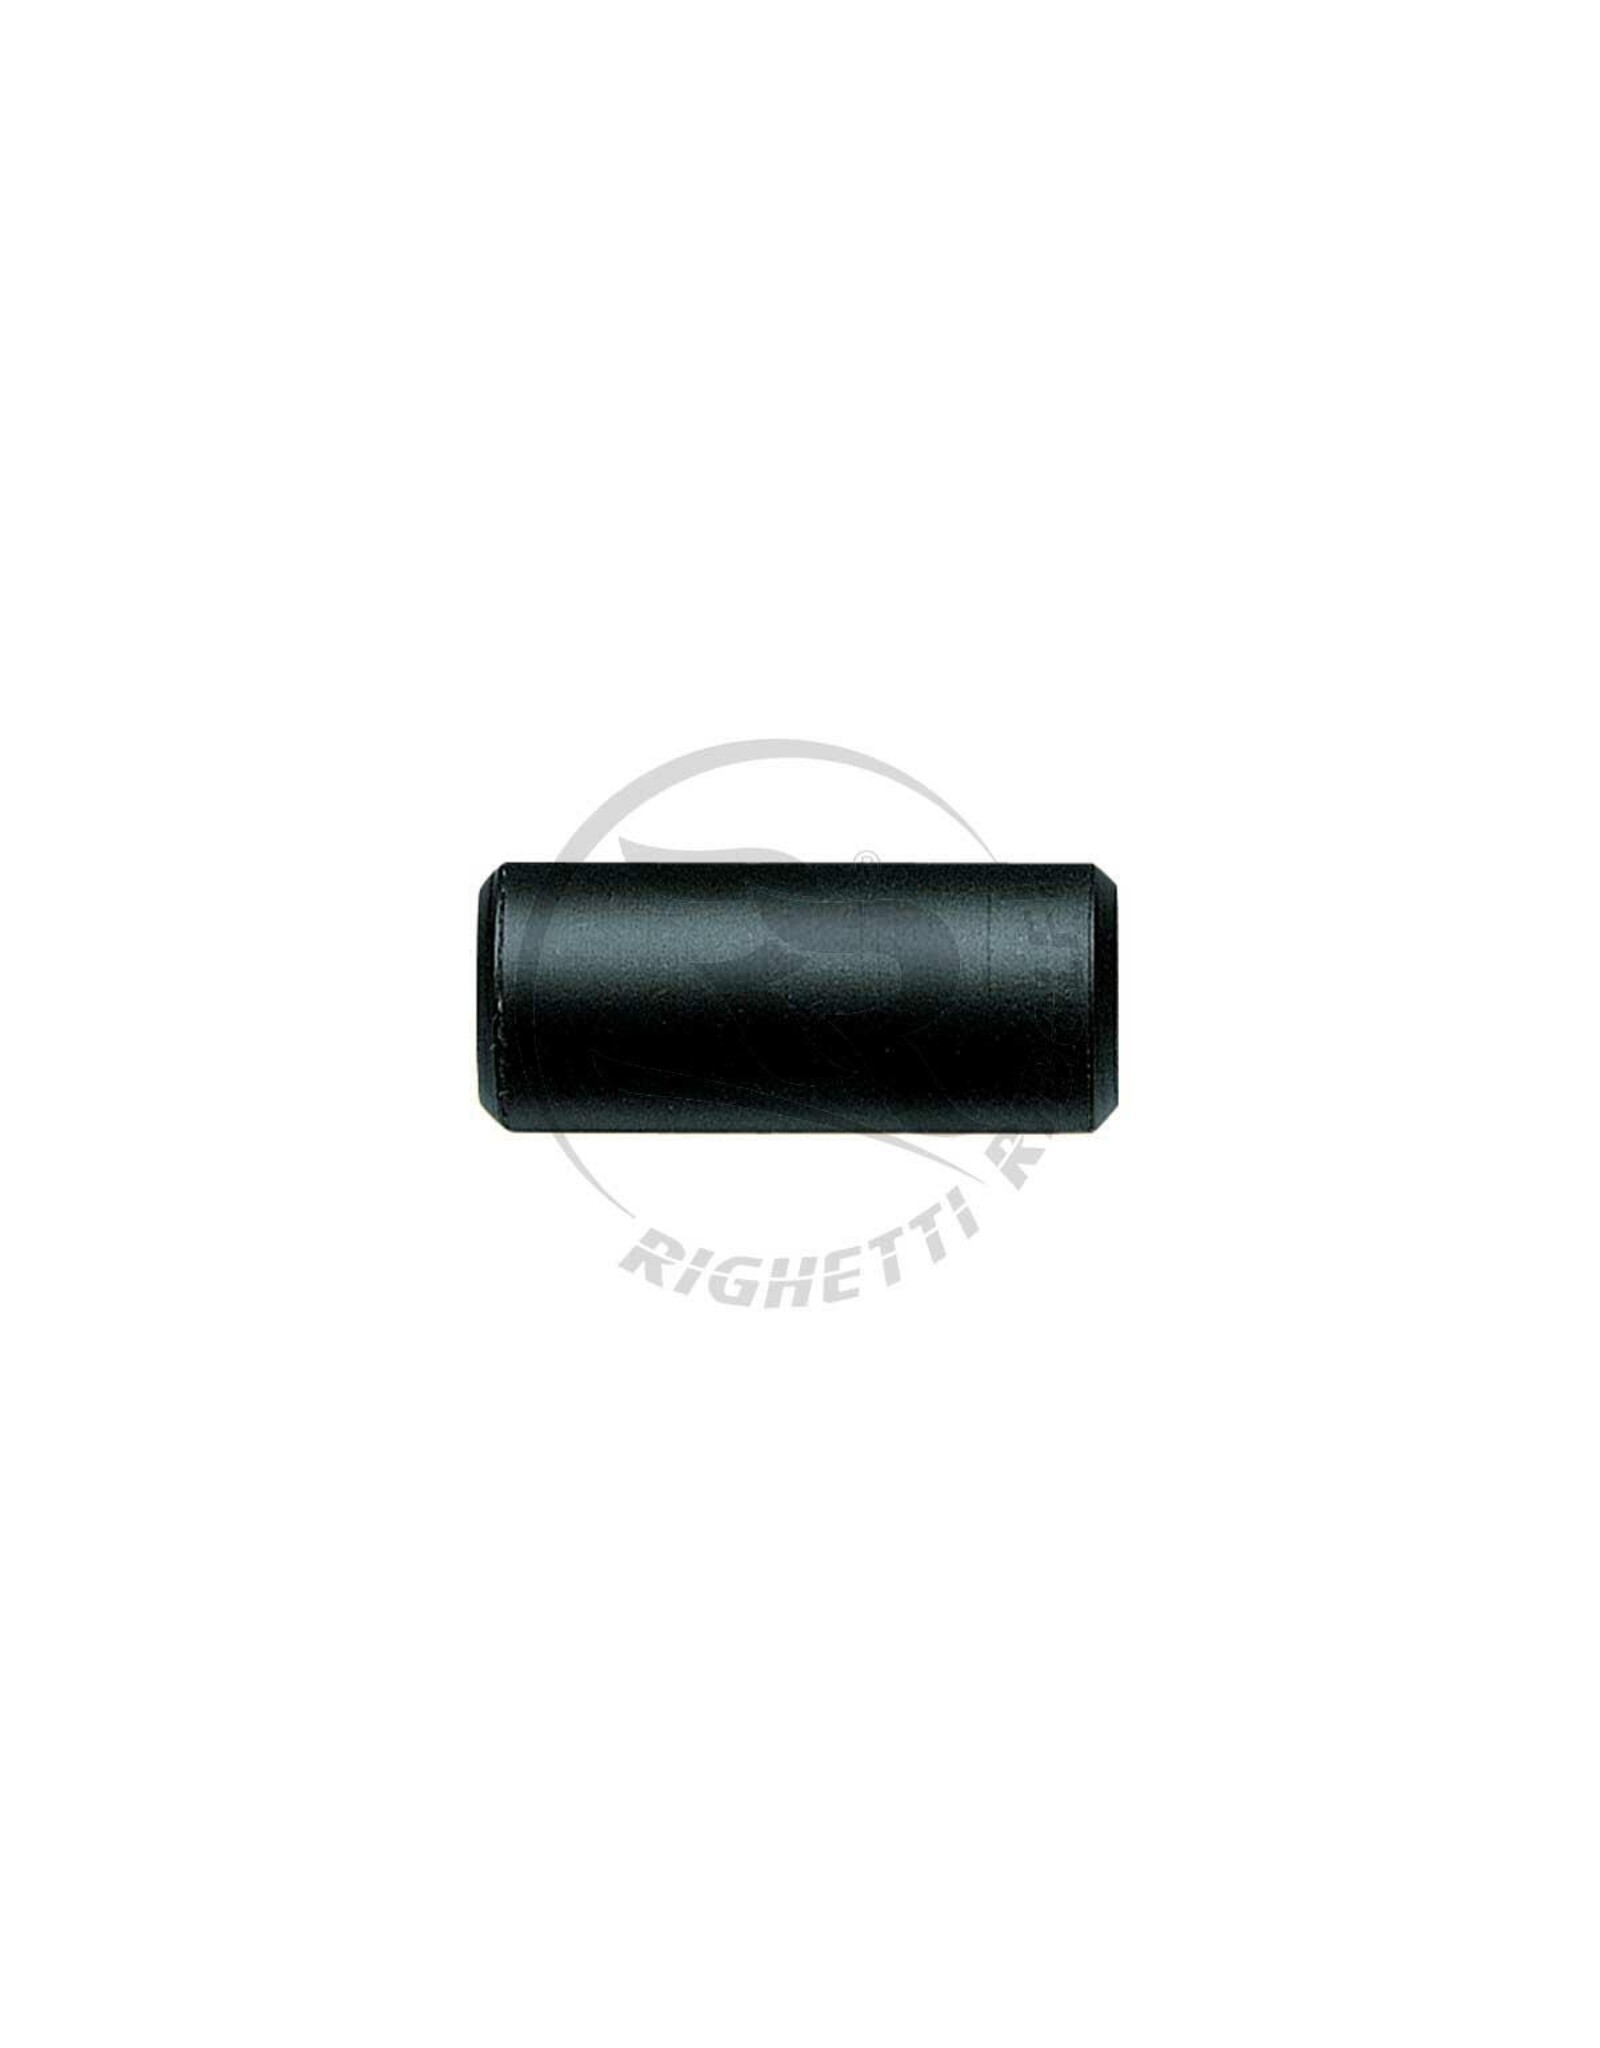 Righetti Ridolfi RR Rear bumper rubber for 30MM frame